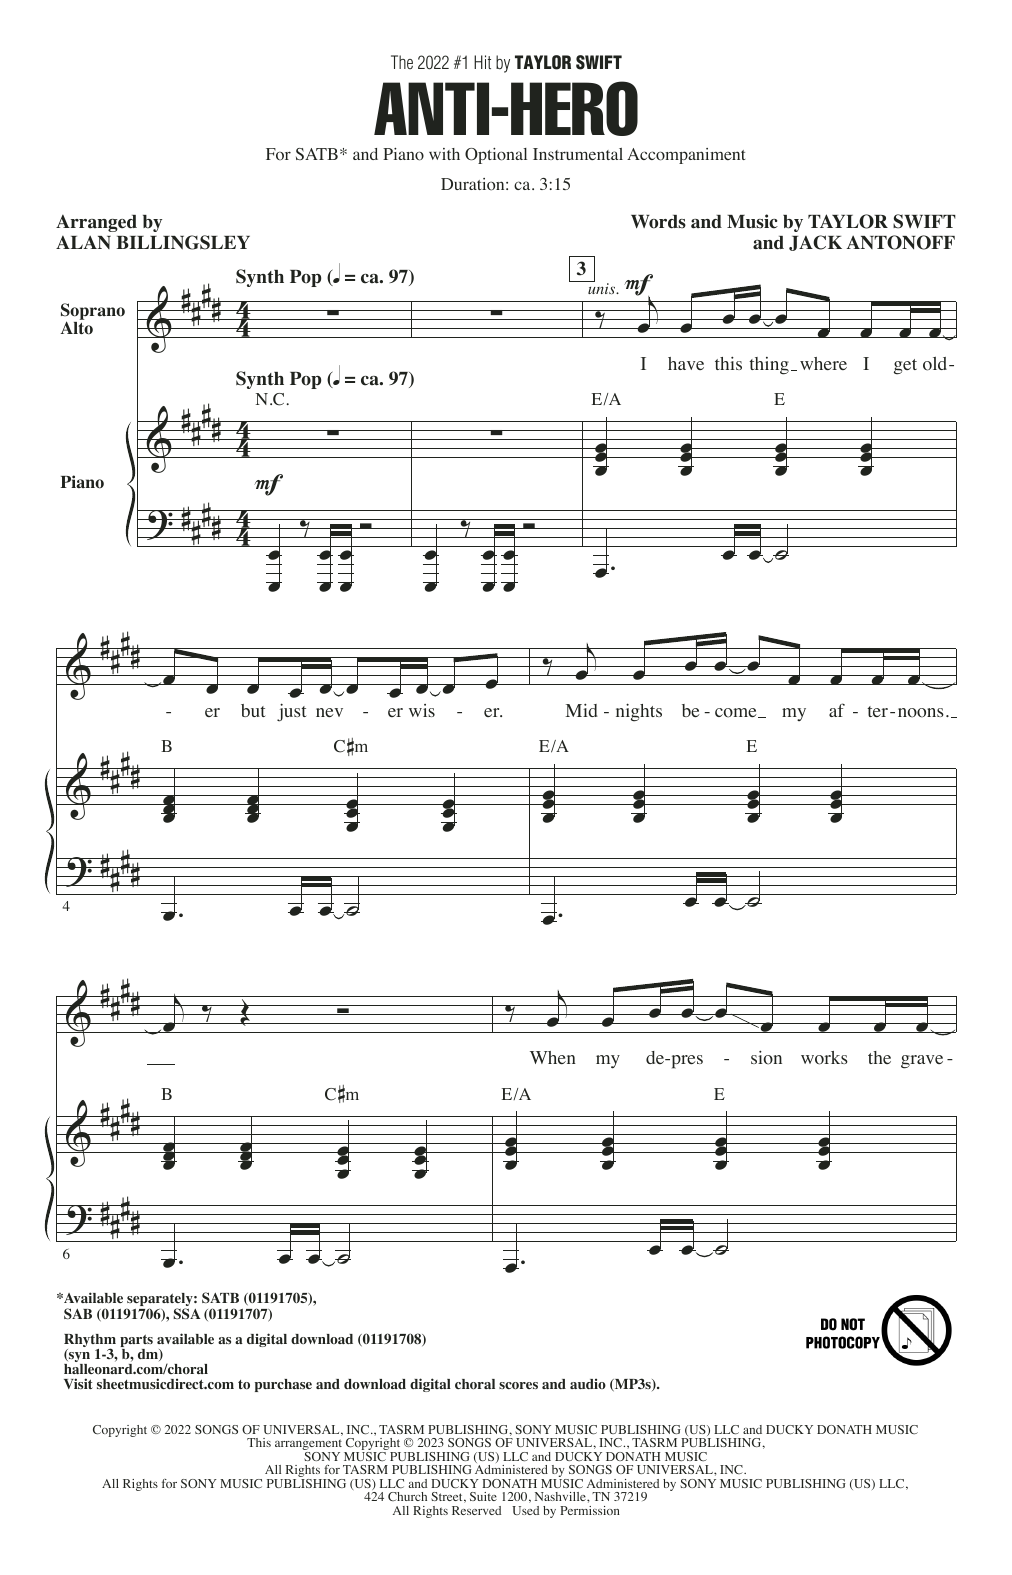 Taylor Swift Anti-Hero (arr. Alan Billingsley) Sheet Music Notes & Chords for SATB Choir - Download or Print PDF